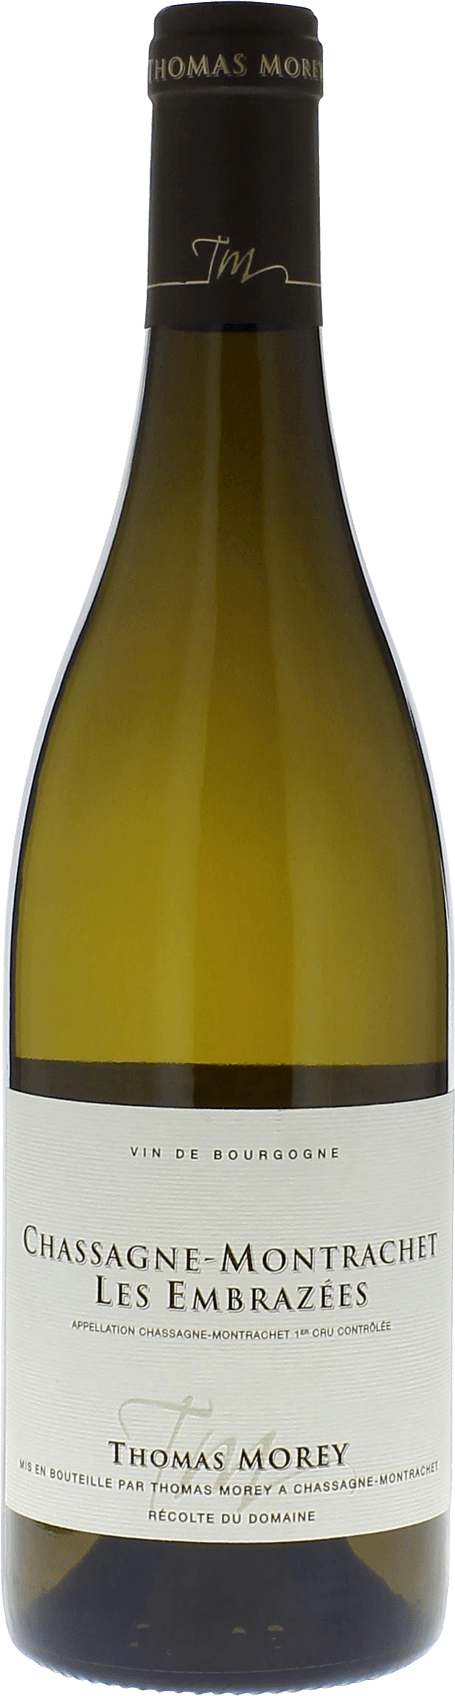 Chassagne montrachet 1er cru embrazes 2017 Domaine MOREY Thomas, Bourgogne blanc